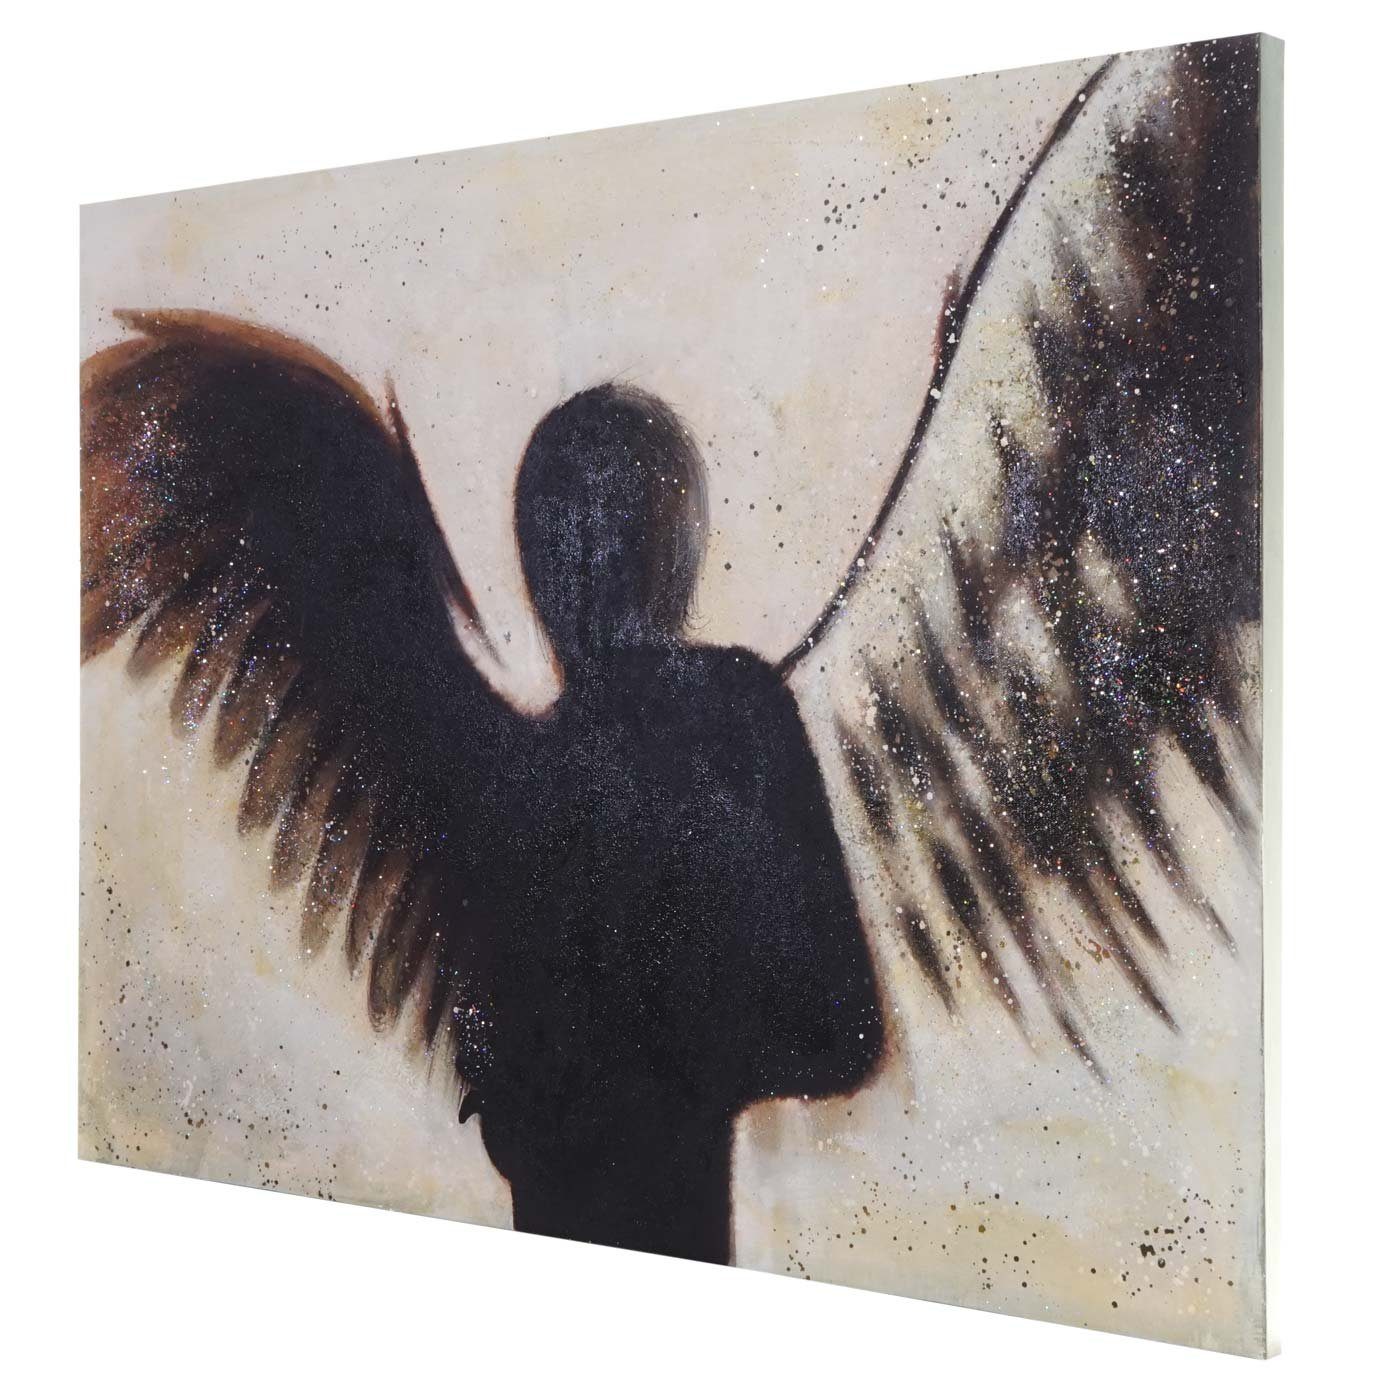 Wandbild Hohe Engel, ein Unikat, Handgemalt, Bild Ölgemälde Engel, Jedes MCW Qualität, Ölfarben